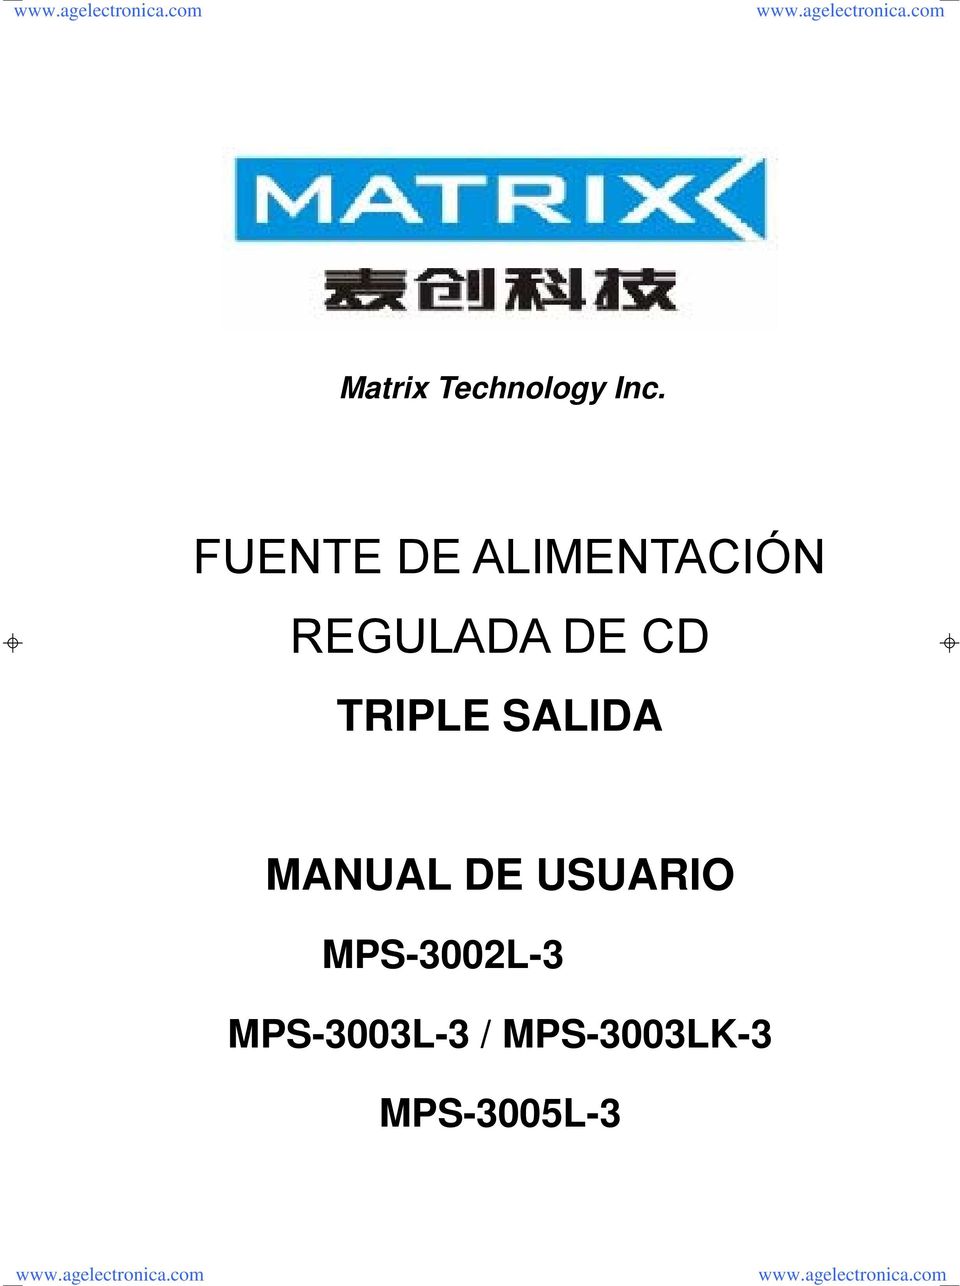 CD TRIPLE SALIDA MANUAL DE USUARIO